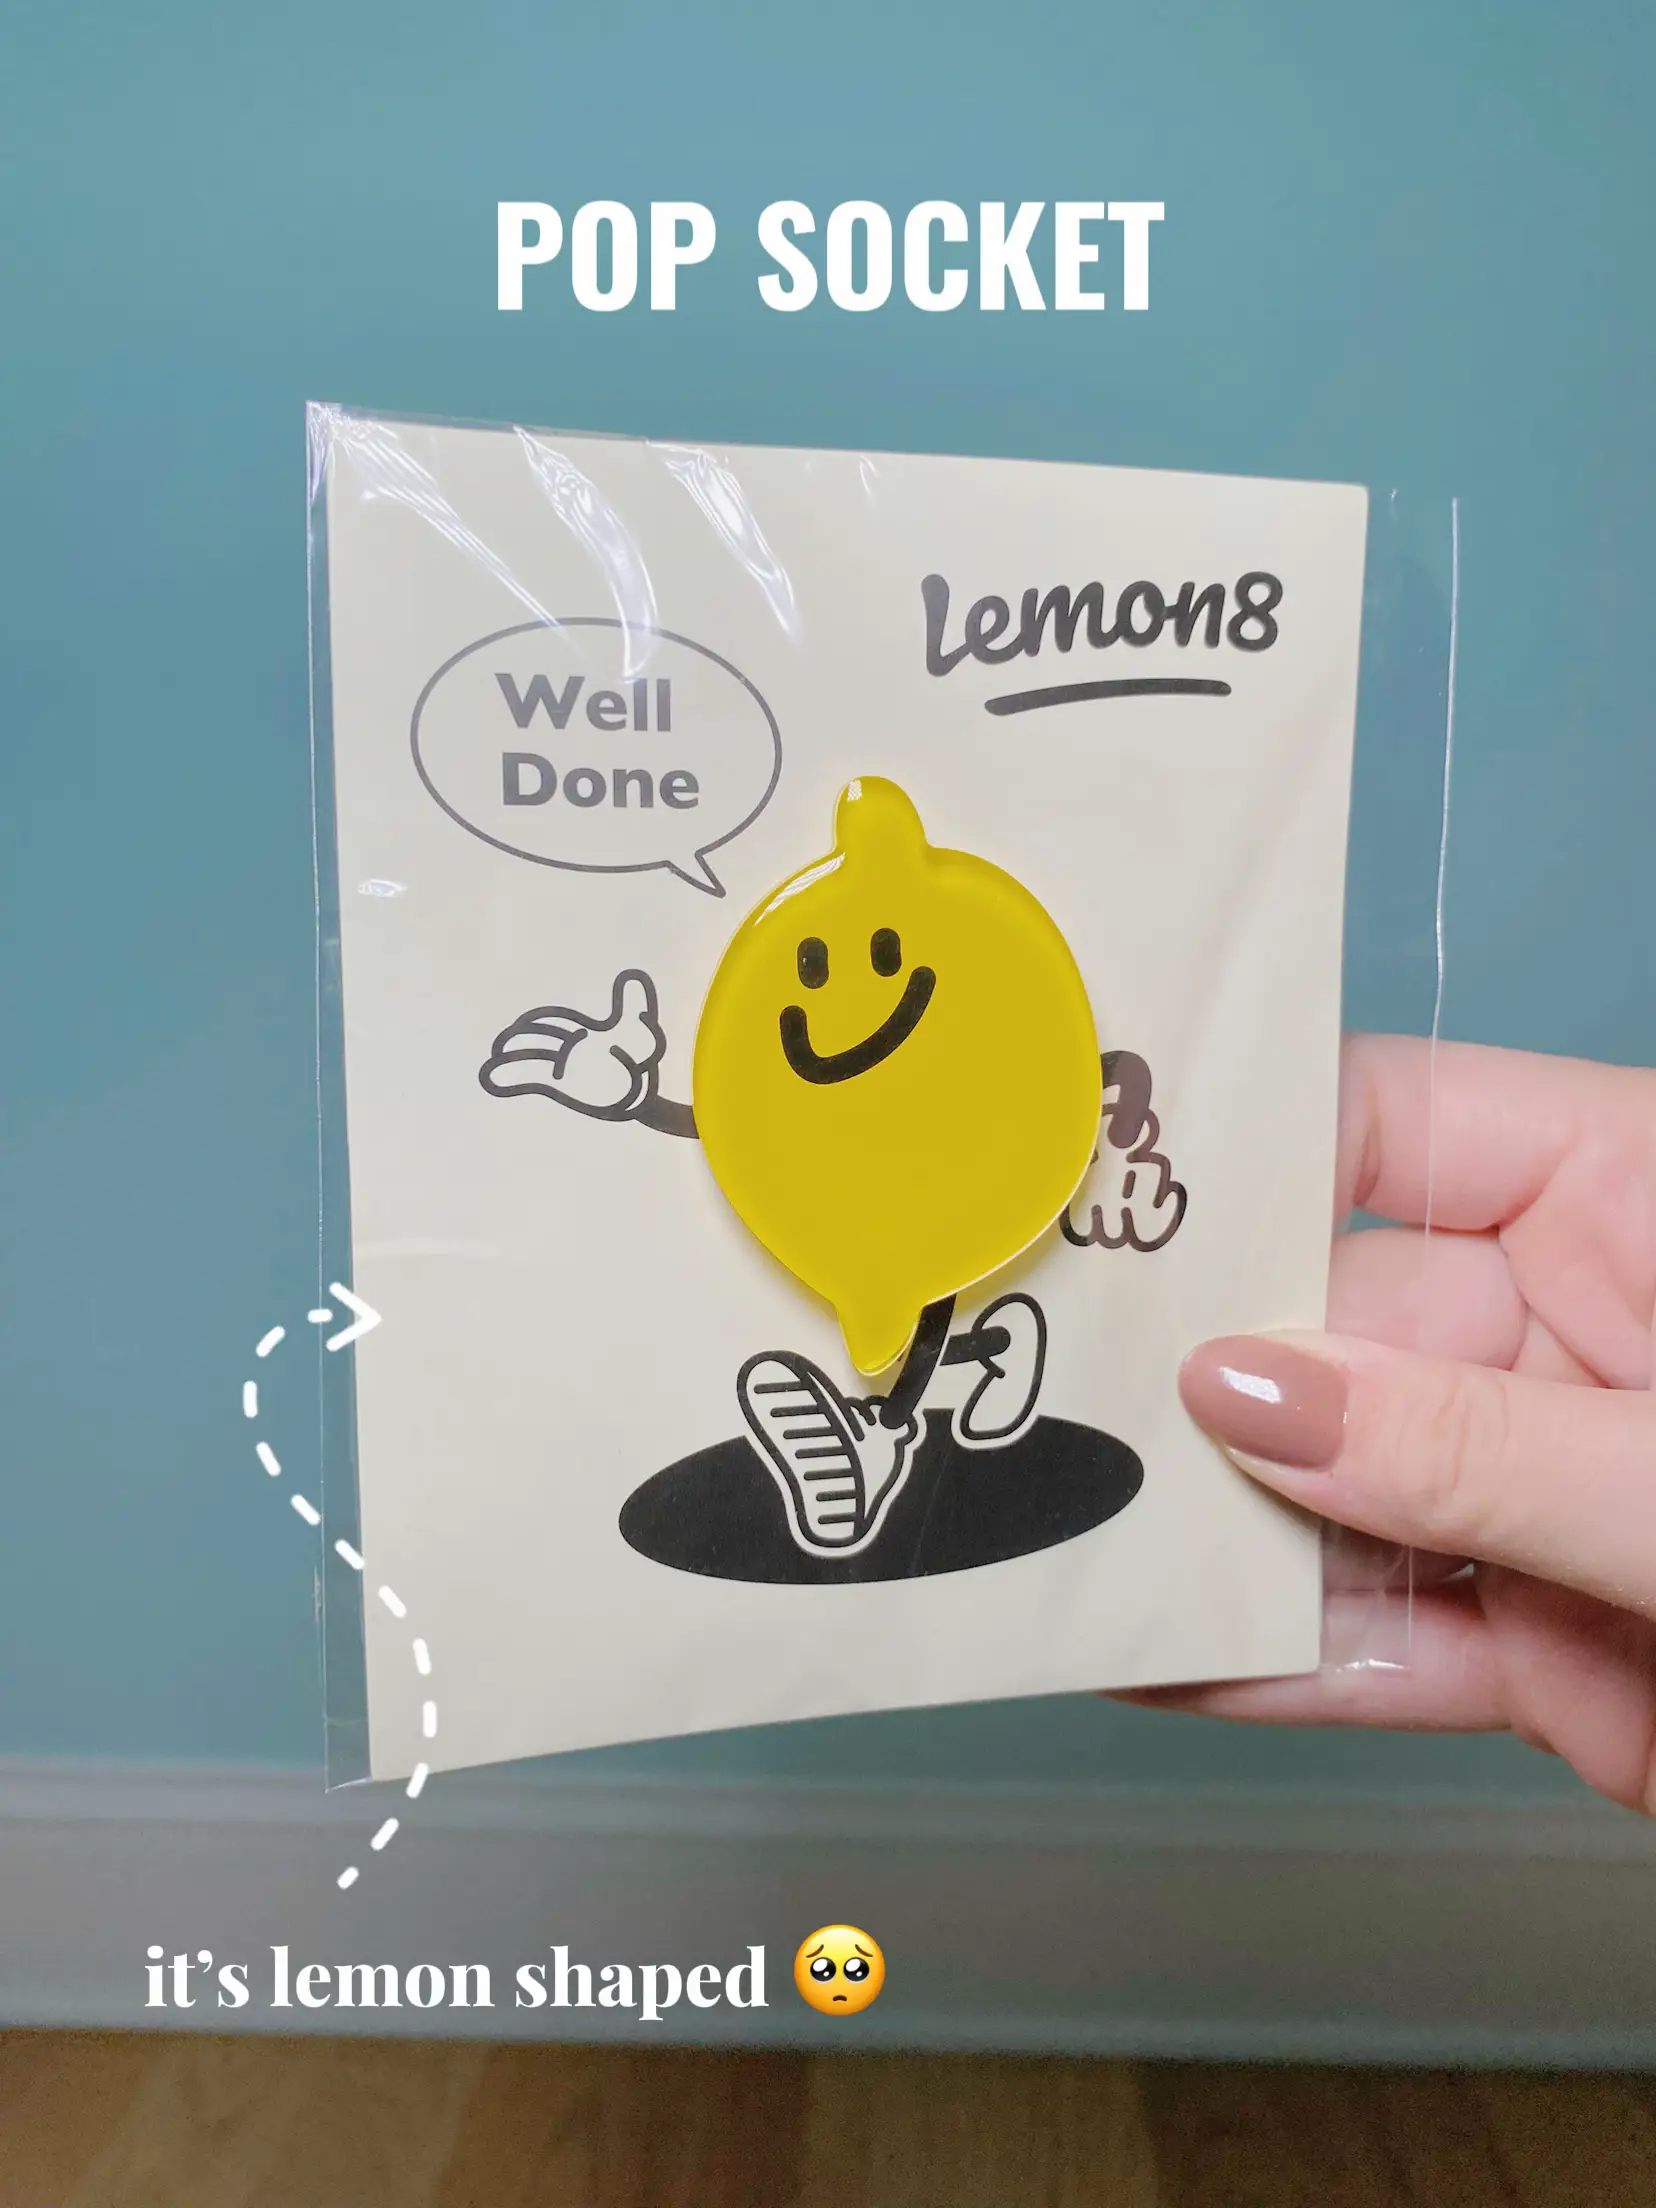  A person is holding a POP SOCKET it's lemon shaped.